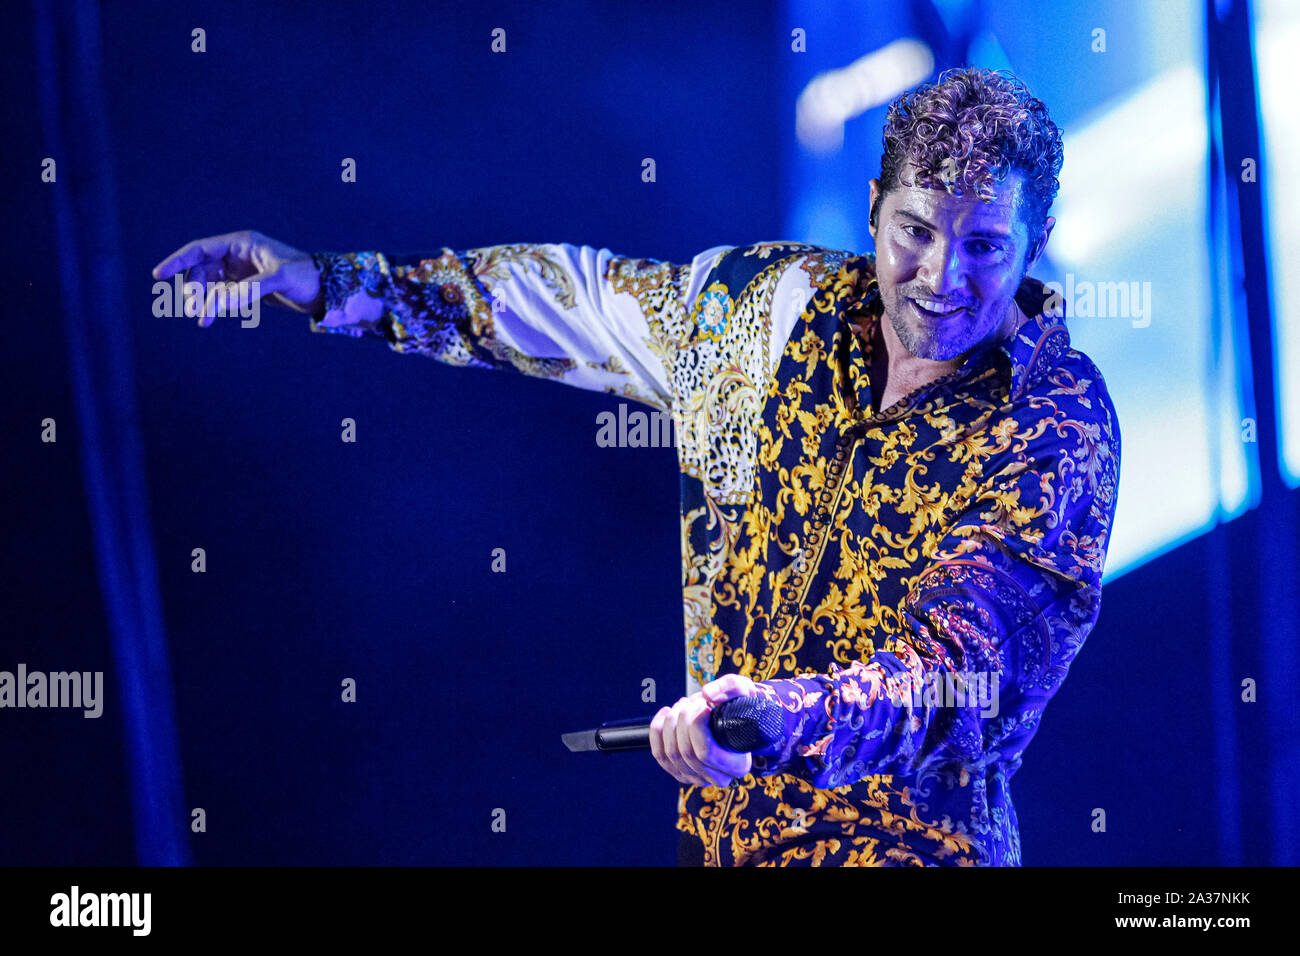 Murcia, Spain. 4th October, 2019. Spanish singer, David Bisbal, during his performance at Tour2019 Concert. © ABEL F. ROS/Alamy Stock Photo